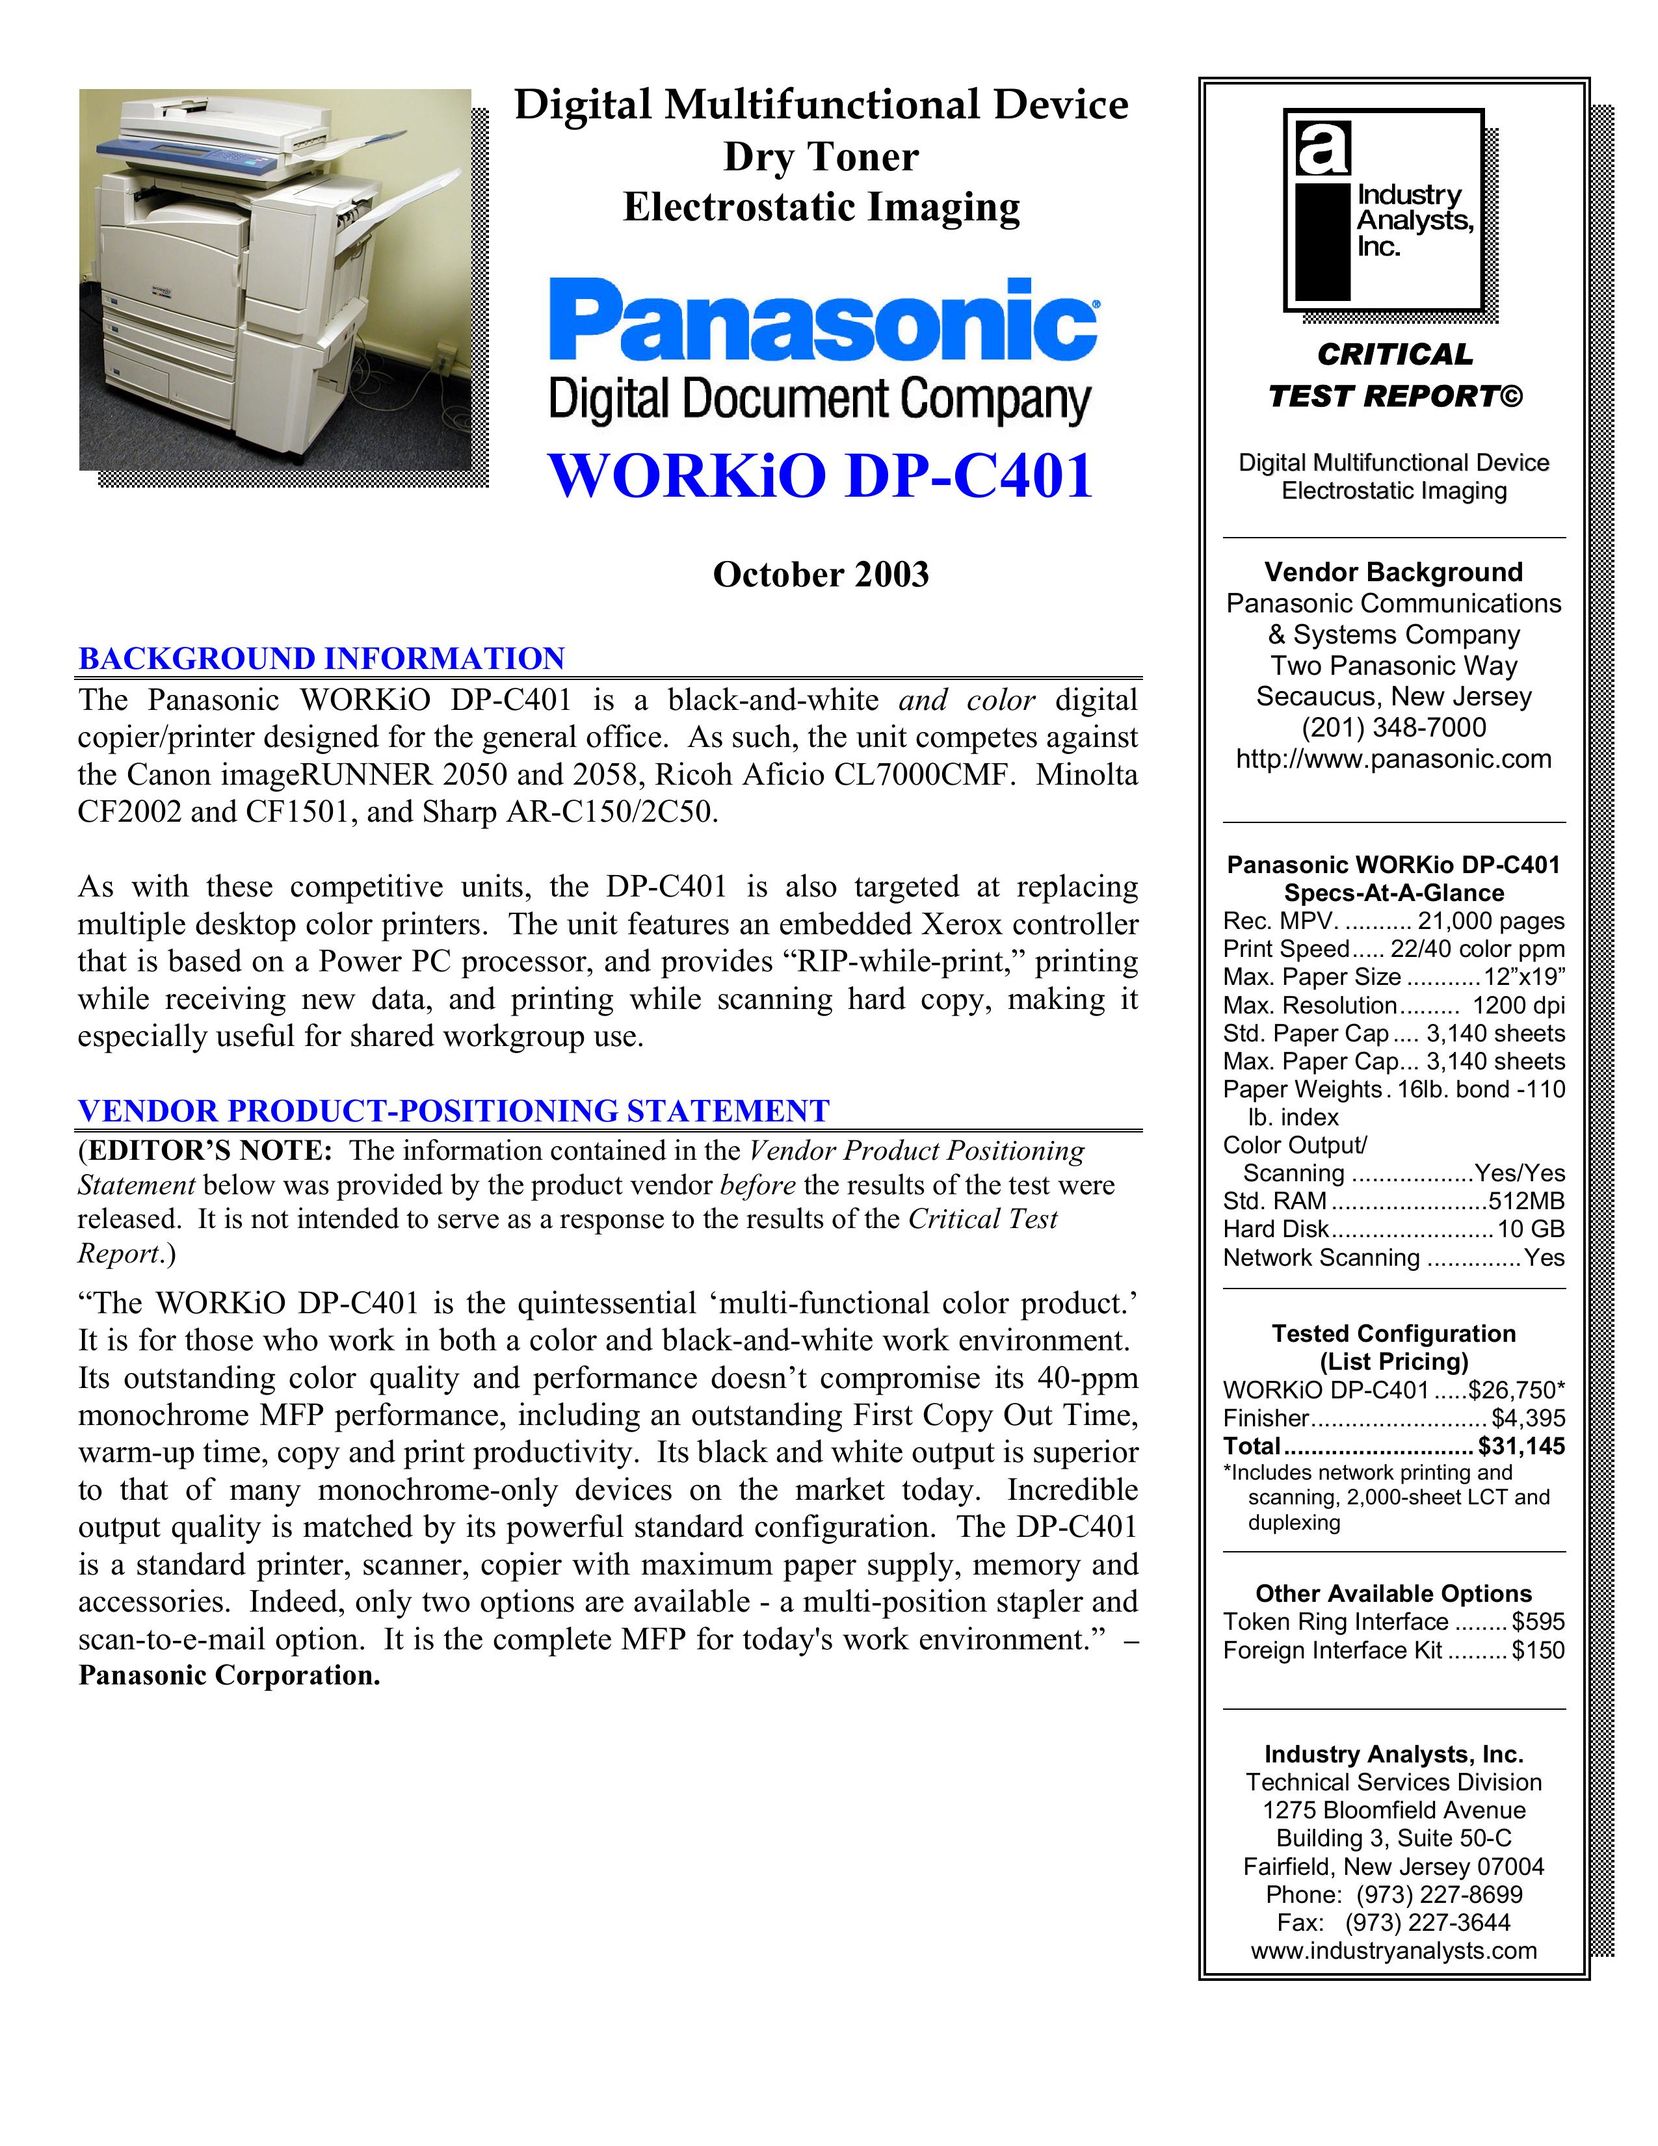 Panasonic DP-C401 Fax Machine User Manual